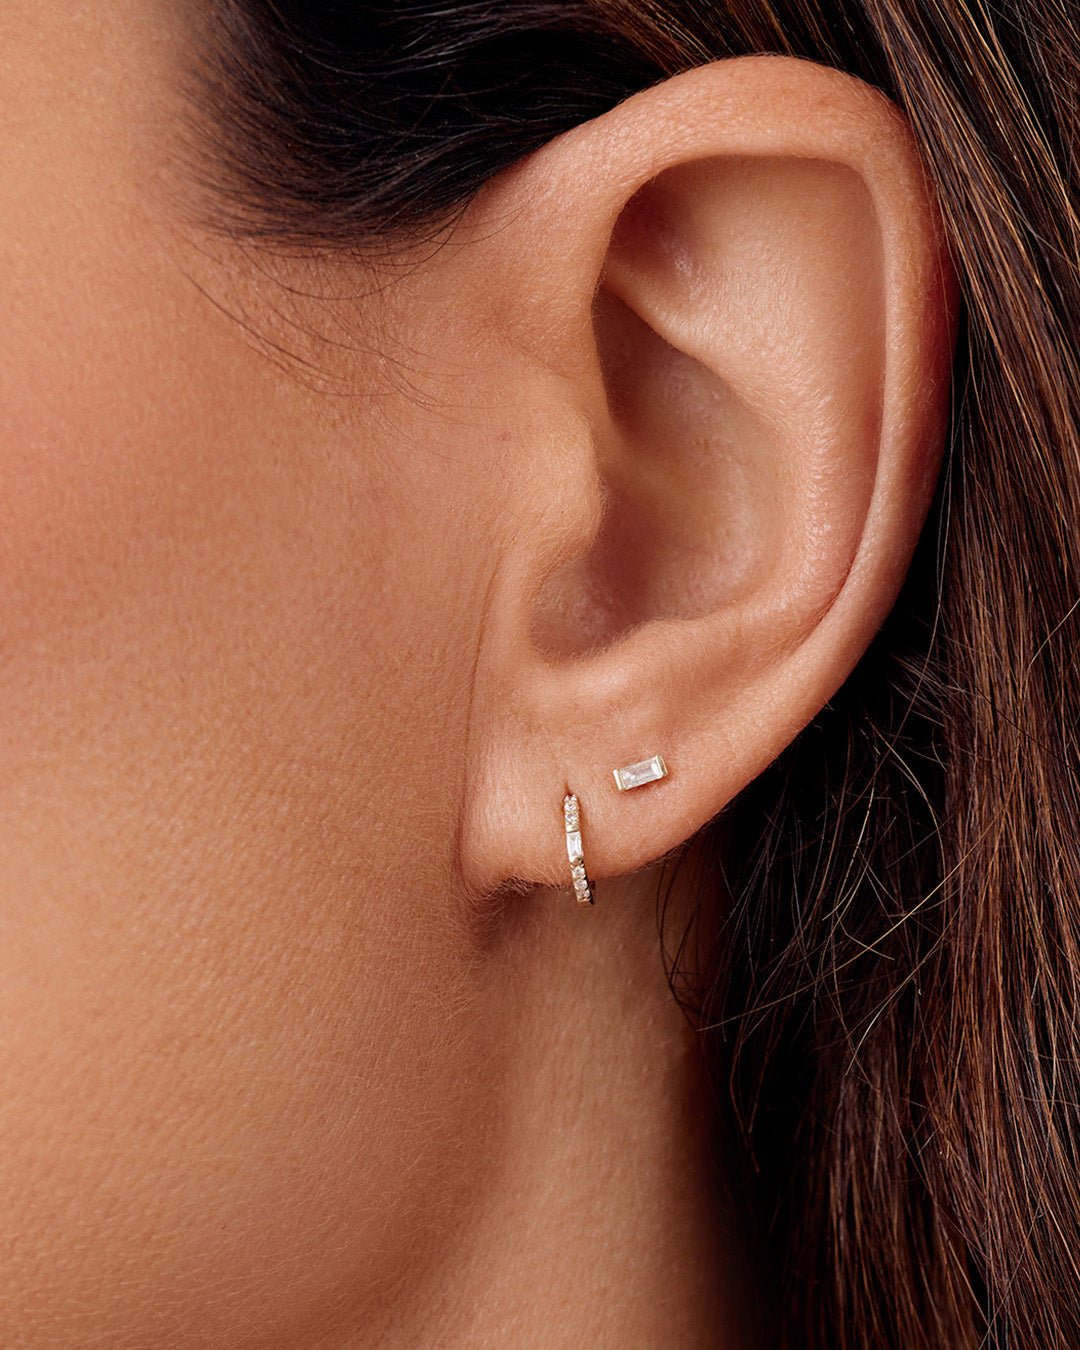 Diamond Morgan StudsDiamond baguette earrings || option::14k Solid Gold